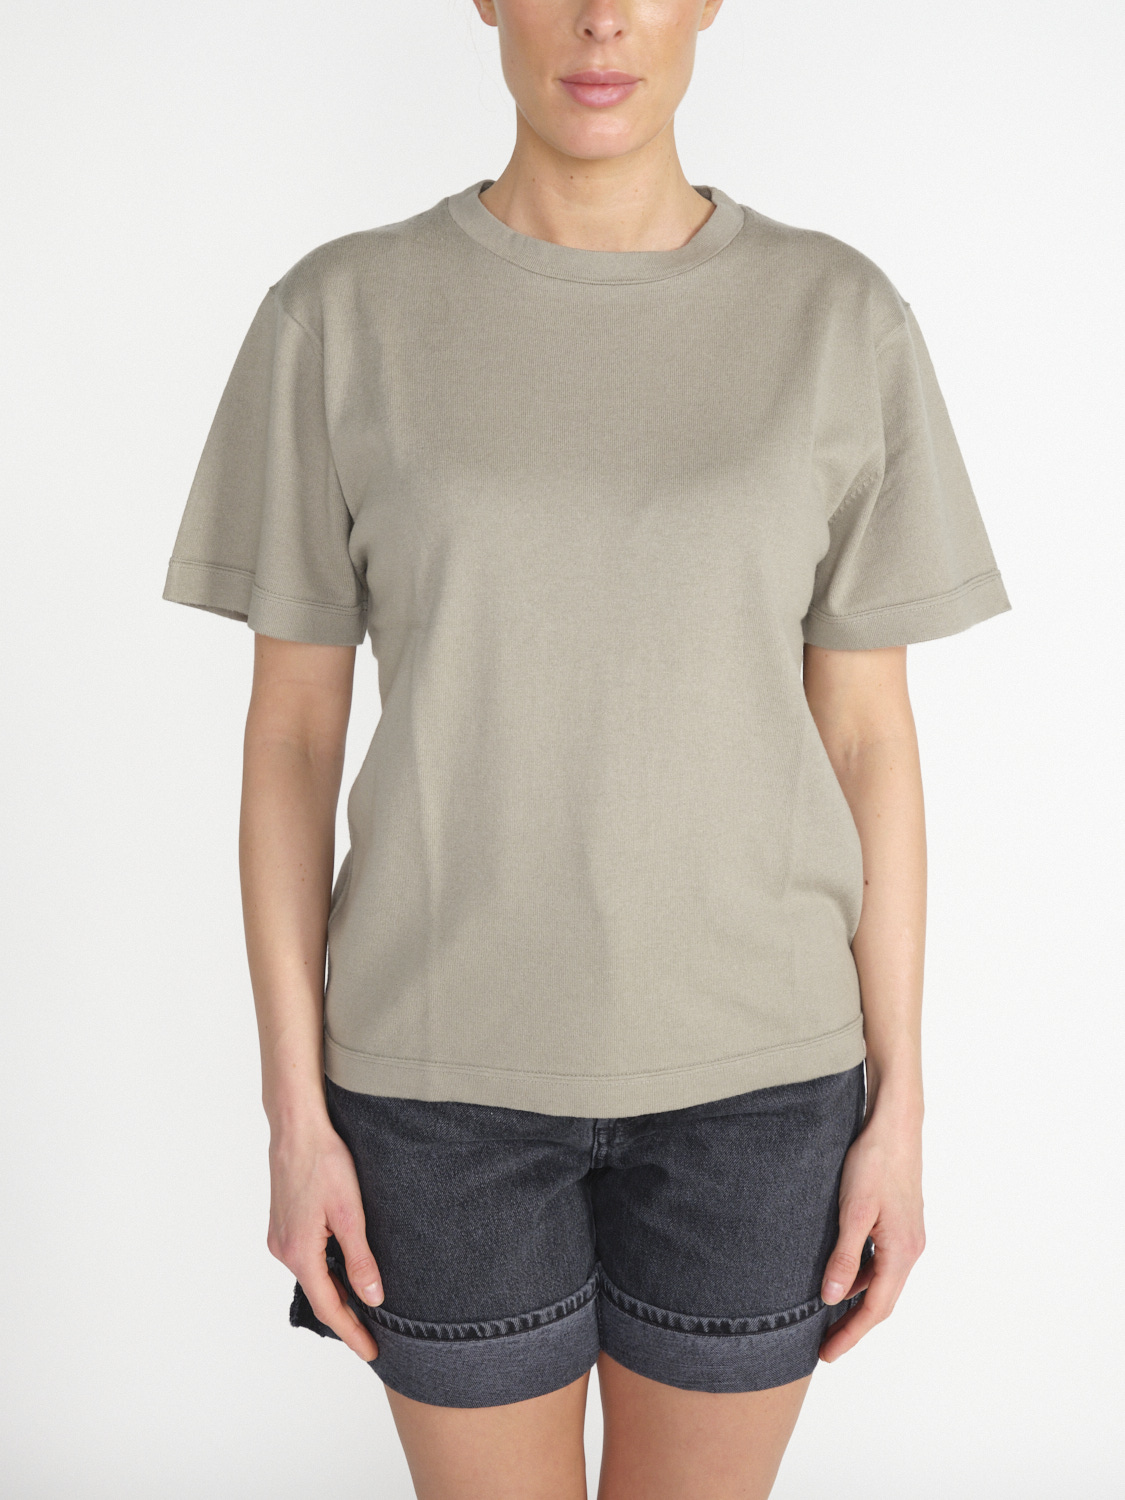 Extreme Cashmere n° 268 Cuba - wide T-shirt in cashmere-cotton blend hellgrün One Size